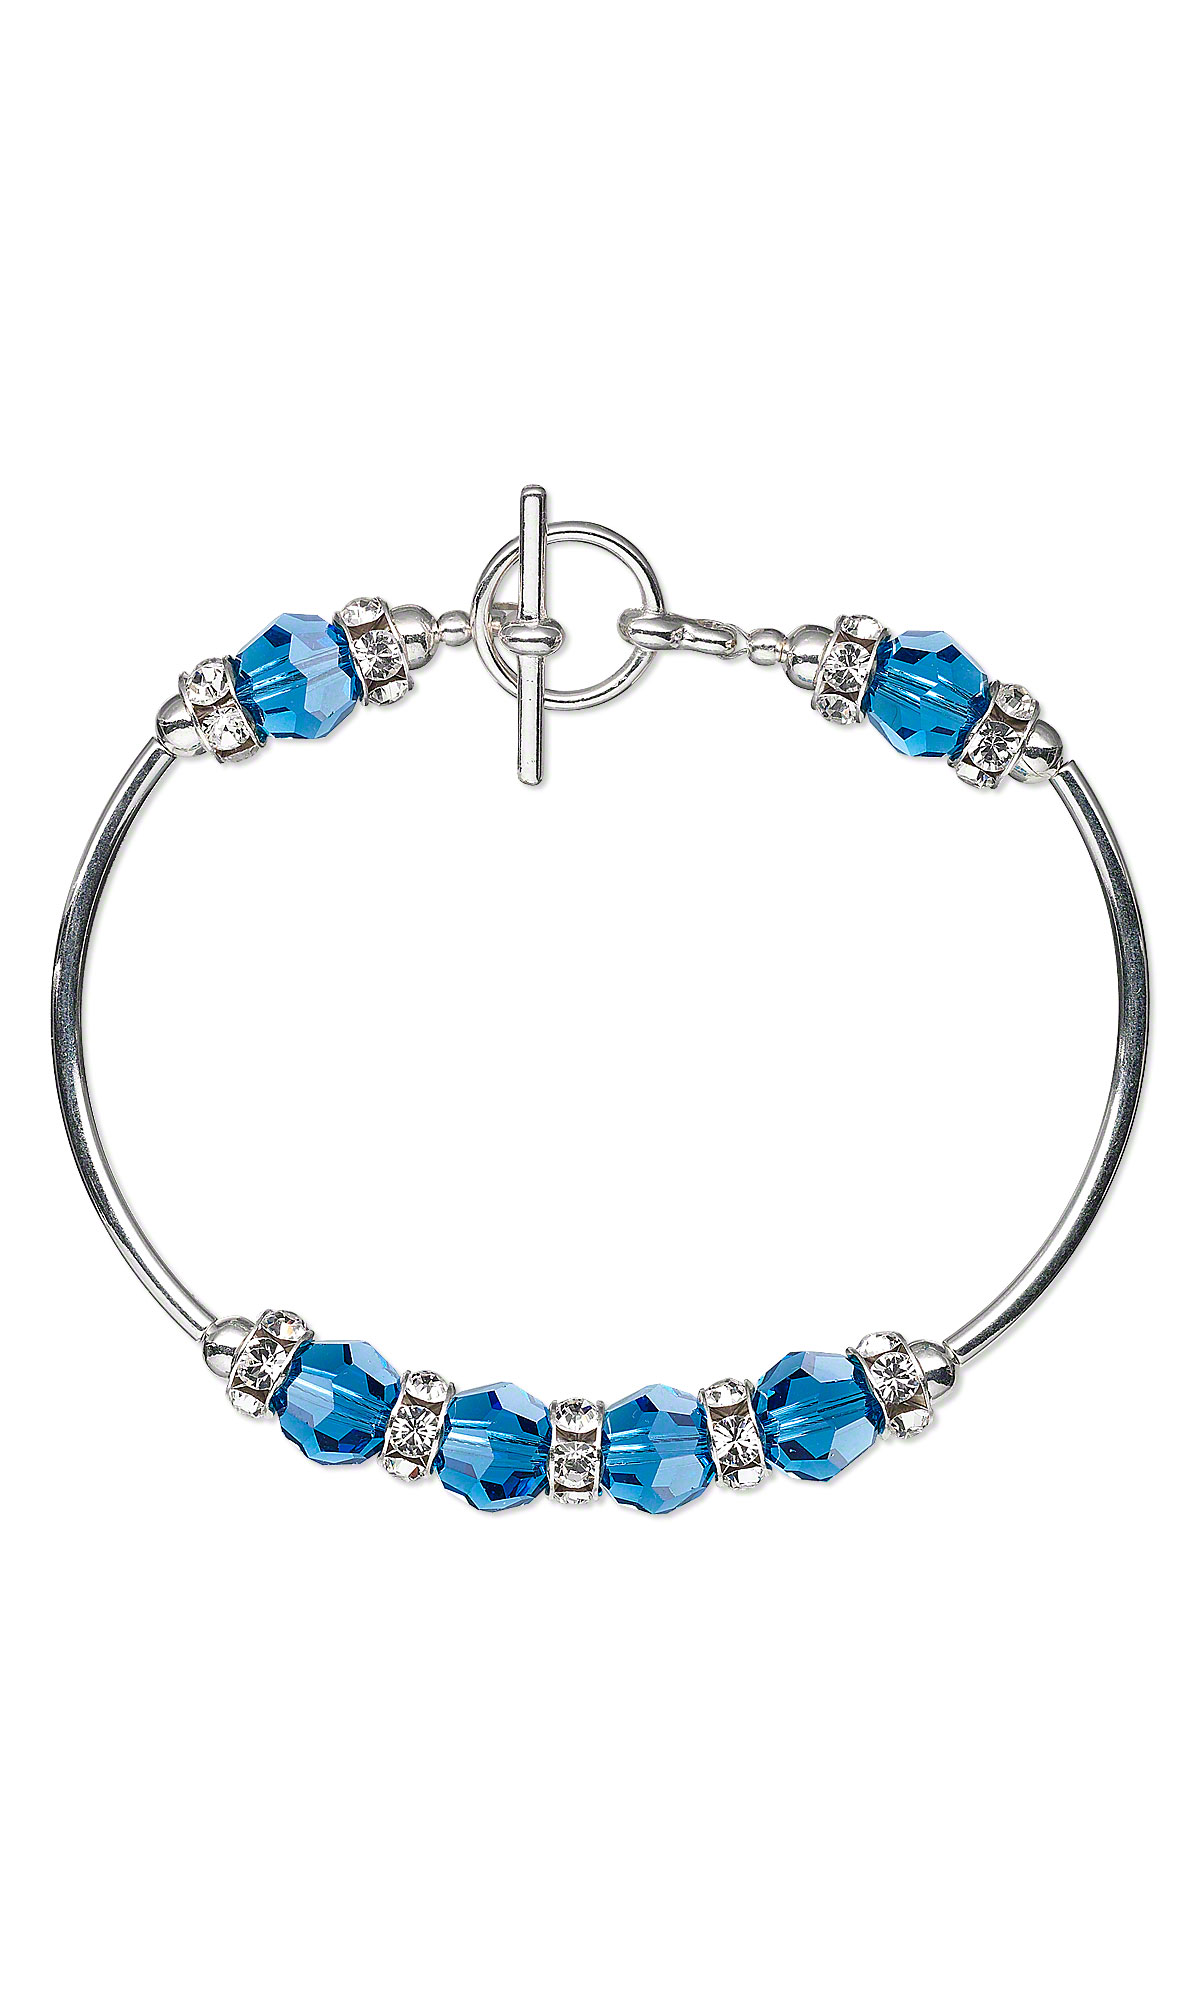 Jewelry Design - Bracelet with Swarovski Crystal Beads and Silver ...